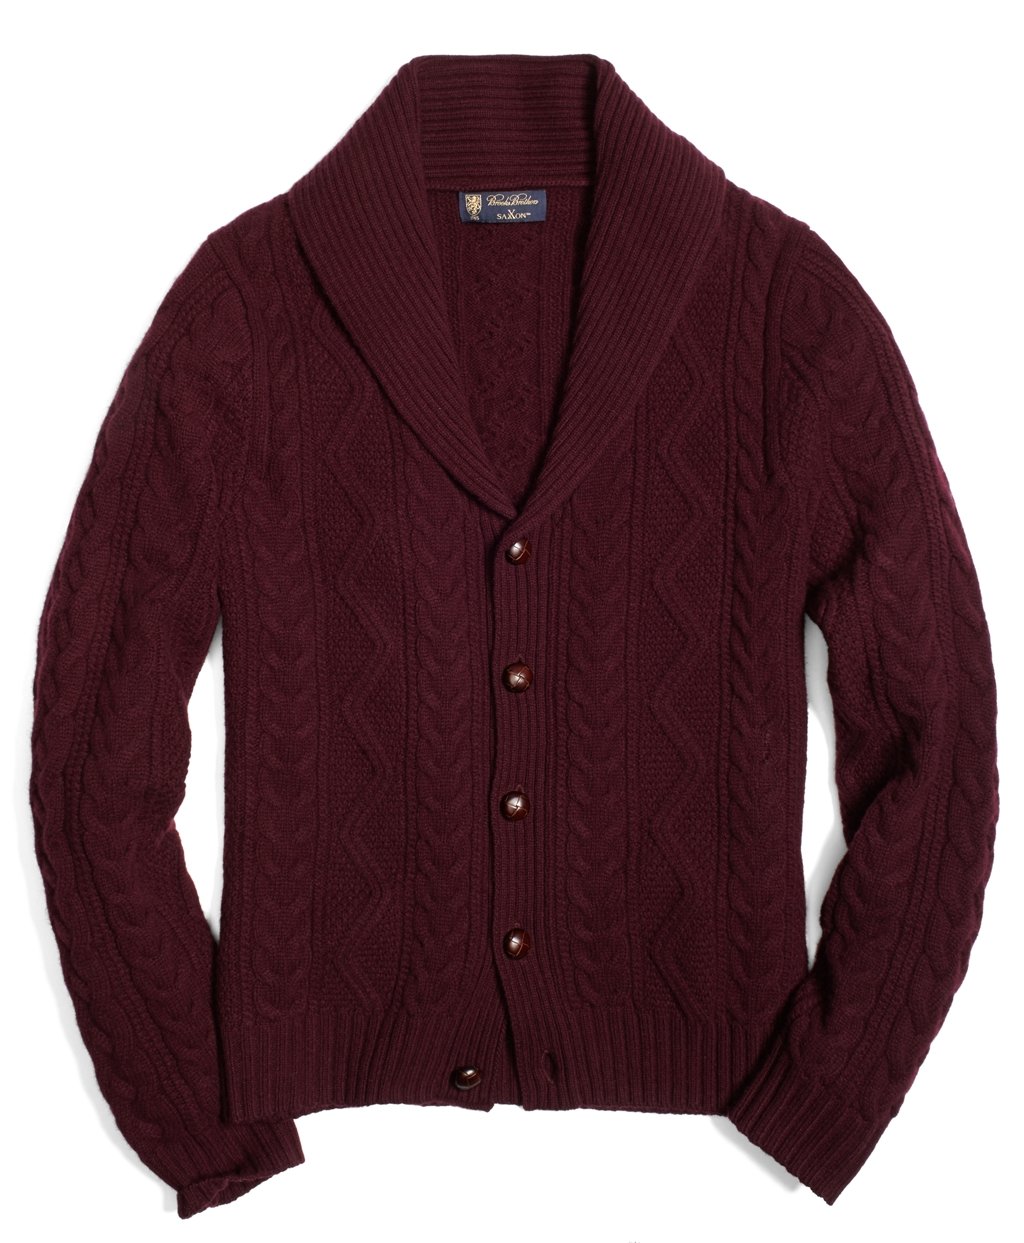 brooks-brothers-burgundy-saxxon-shawl-collar-fisherman-cardigan-product-1-12914224-451009605.jpeg